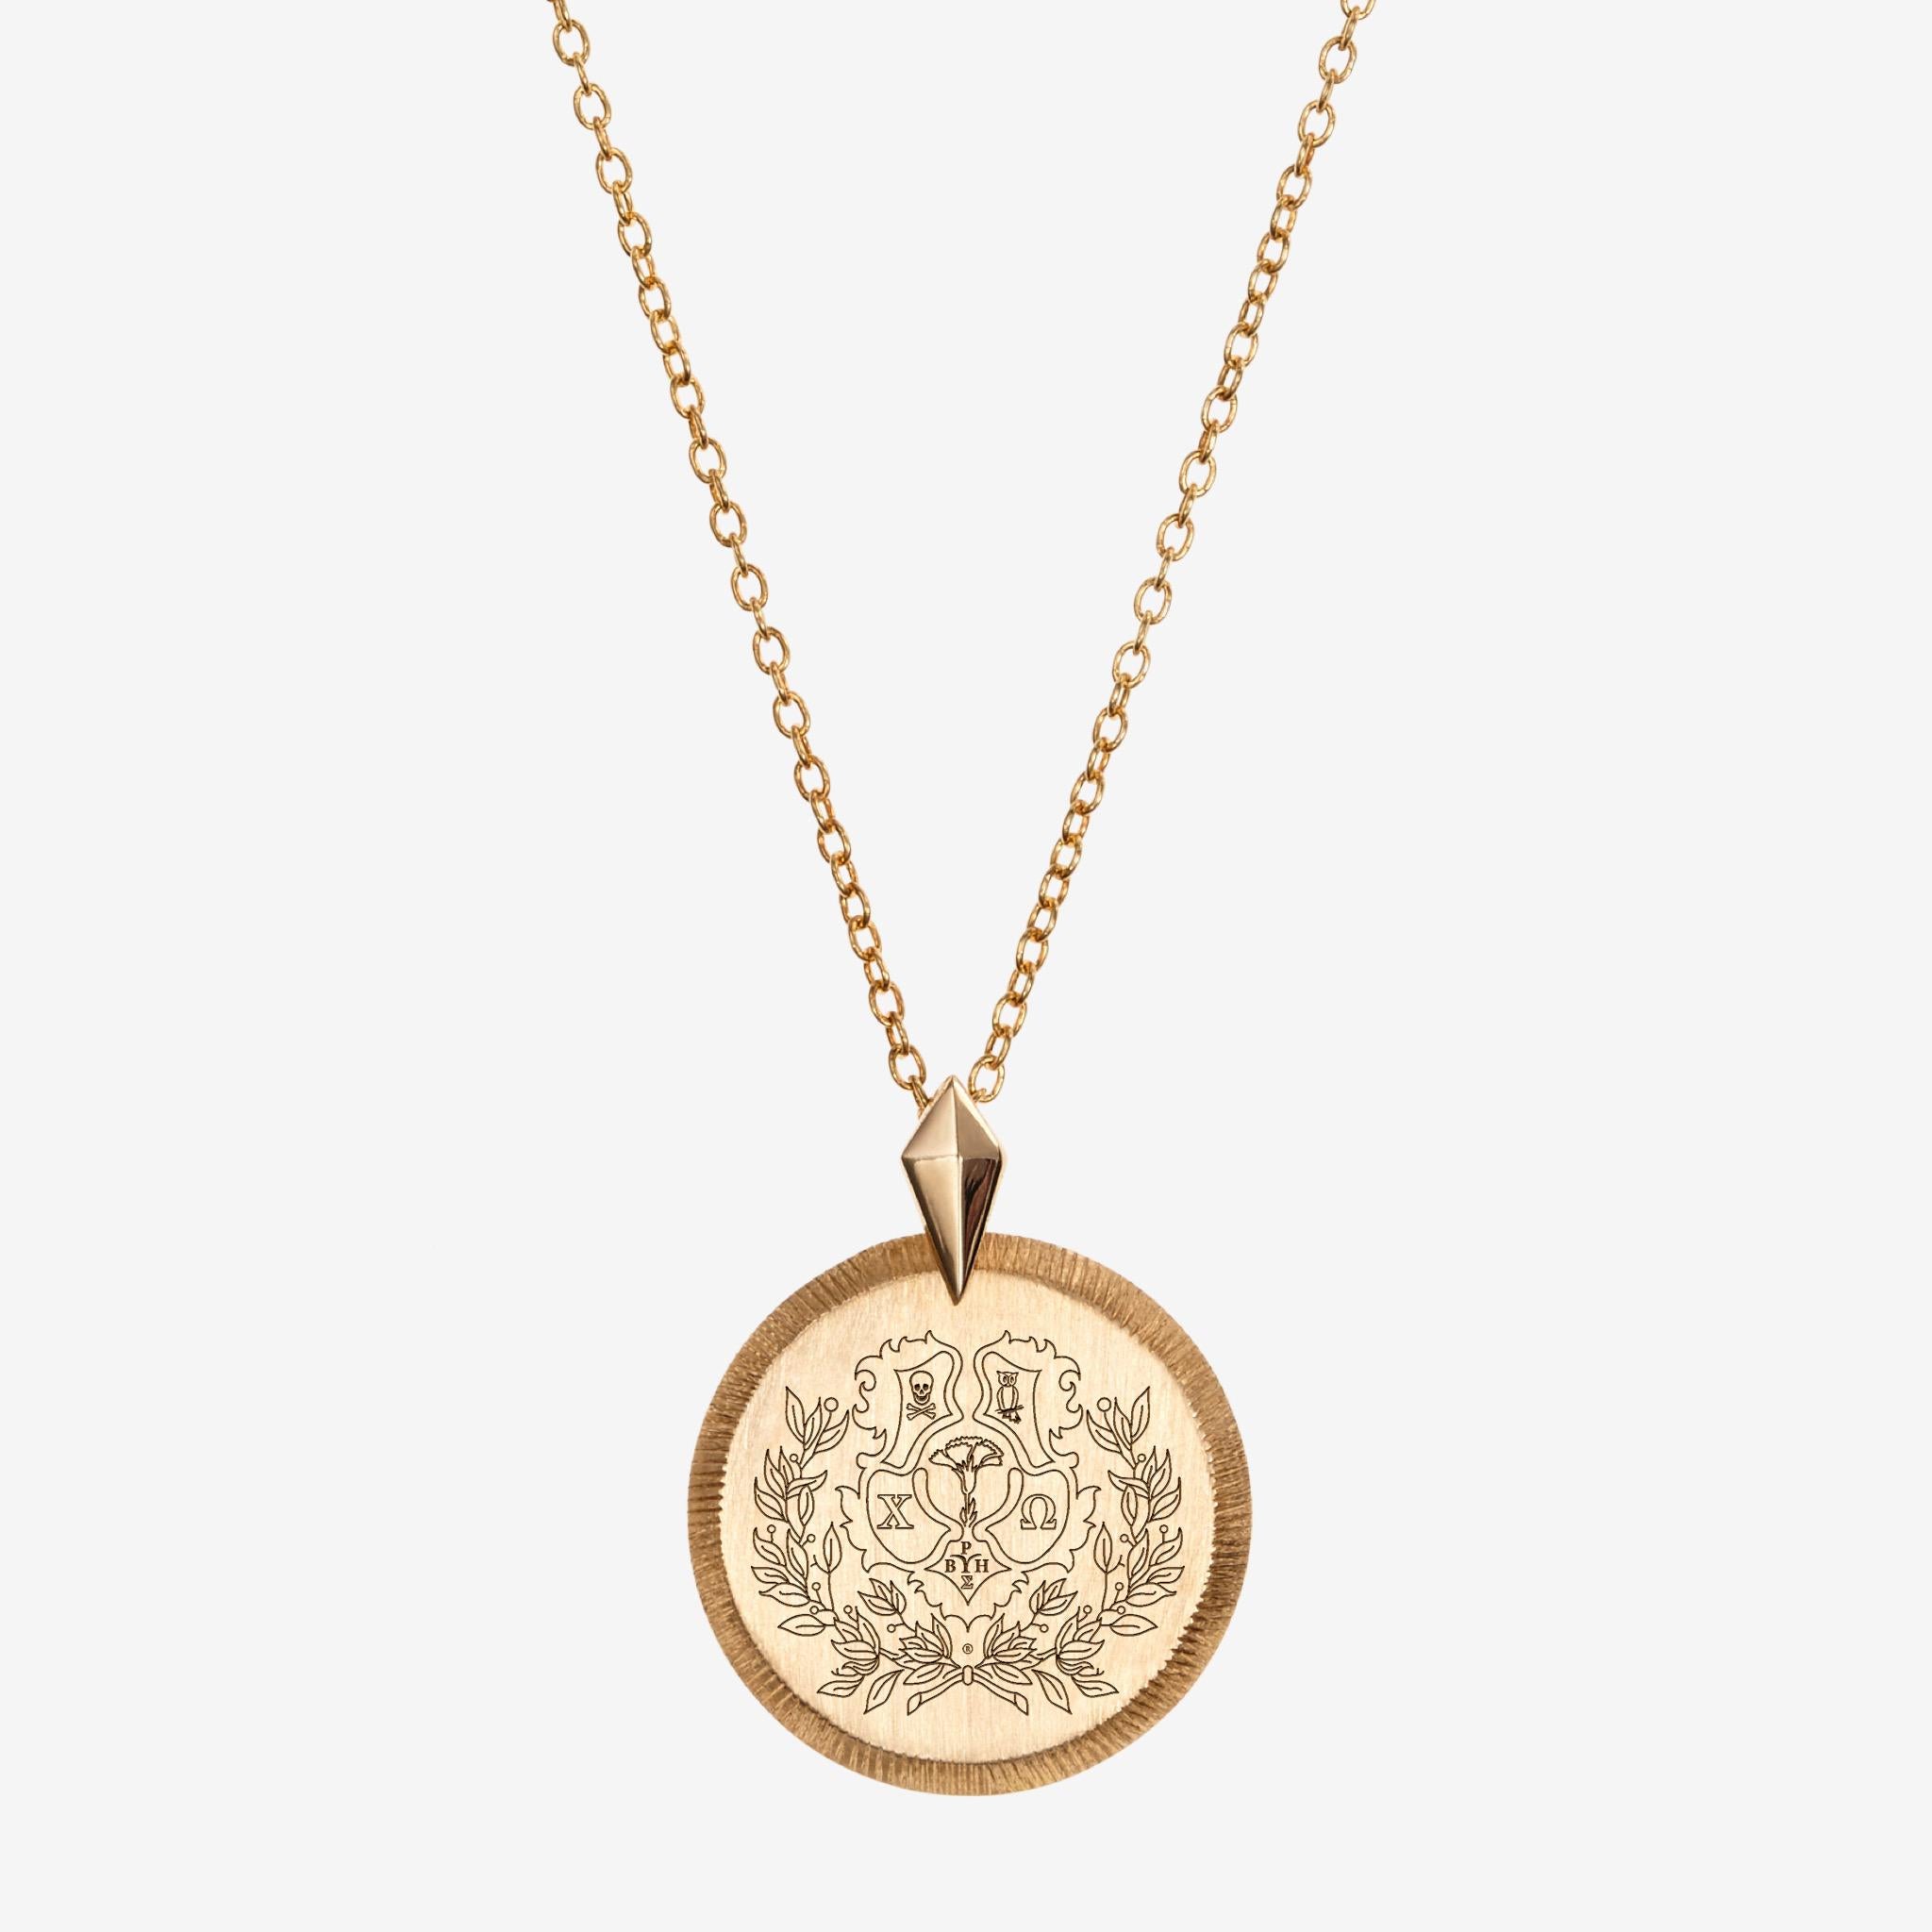 CHI OMEGA Charm Necklace / Chi Omega Necklace / Sorority Jewelry /  Oversized Long Necklace - 14k Gold Filled